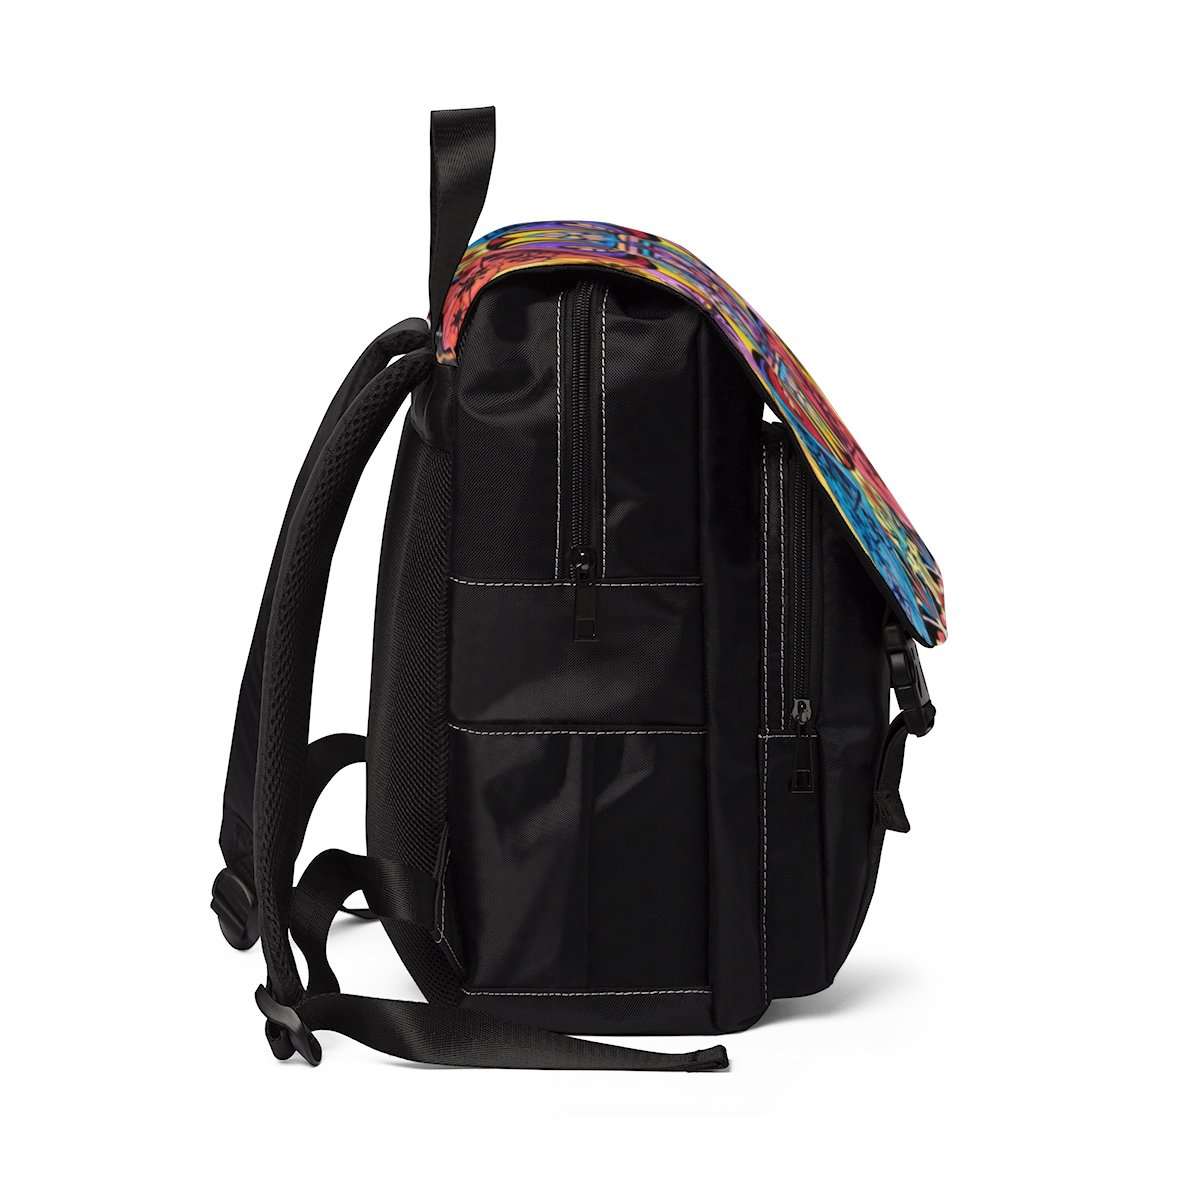 we-have-the-best-selection-of-worldly-abundance-unisex-casual-shoulder-backpack-on-sale_1.jpg